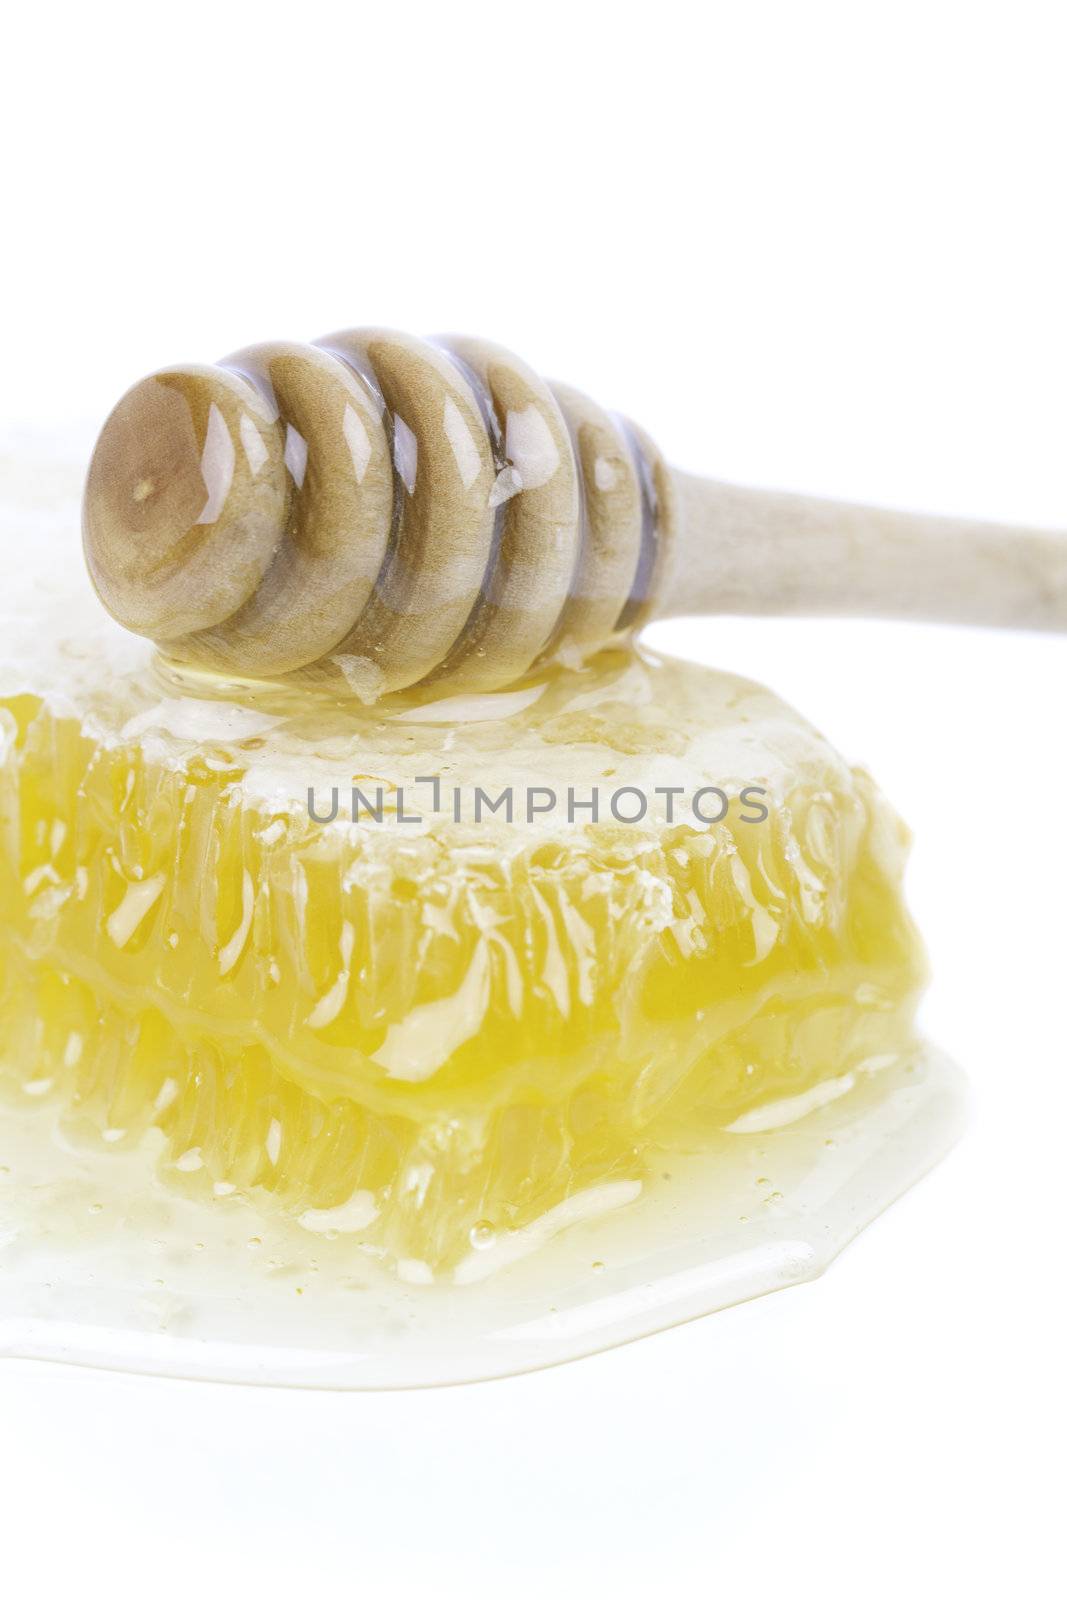 healthy organic honeycomb isolated on white background
 by motorolka